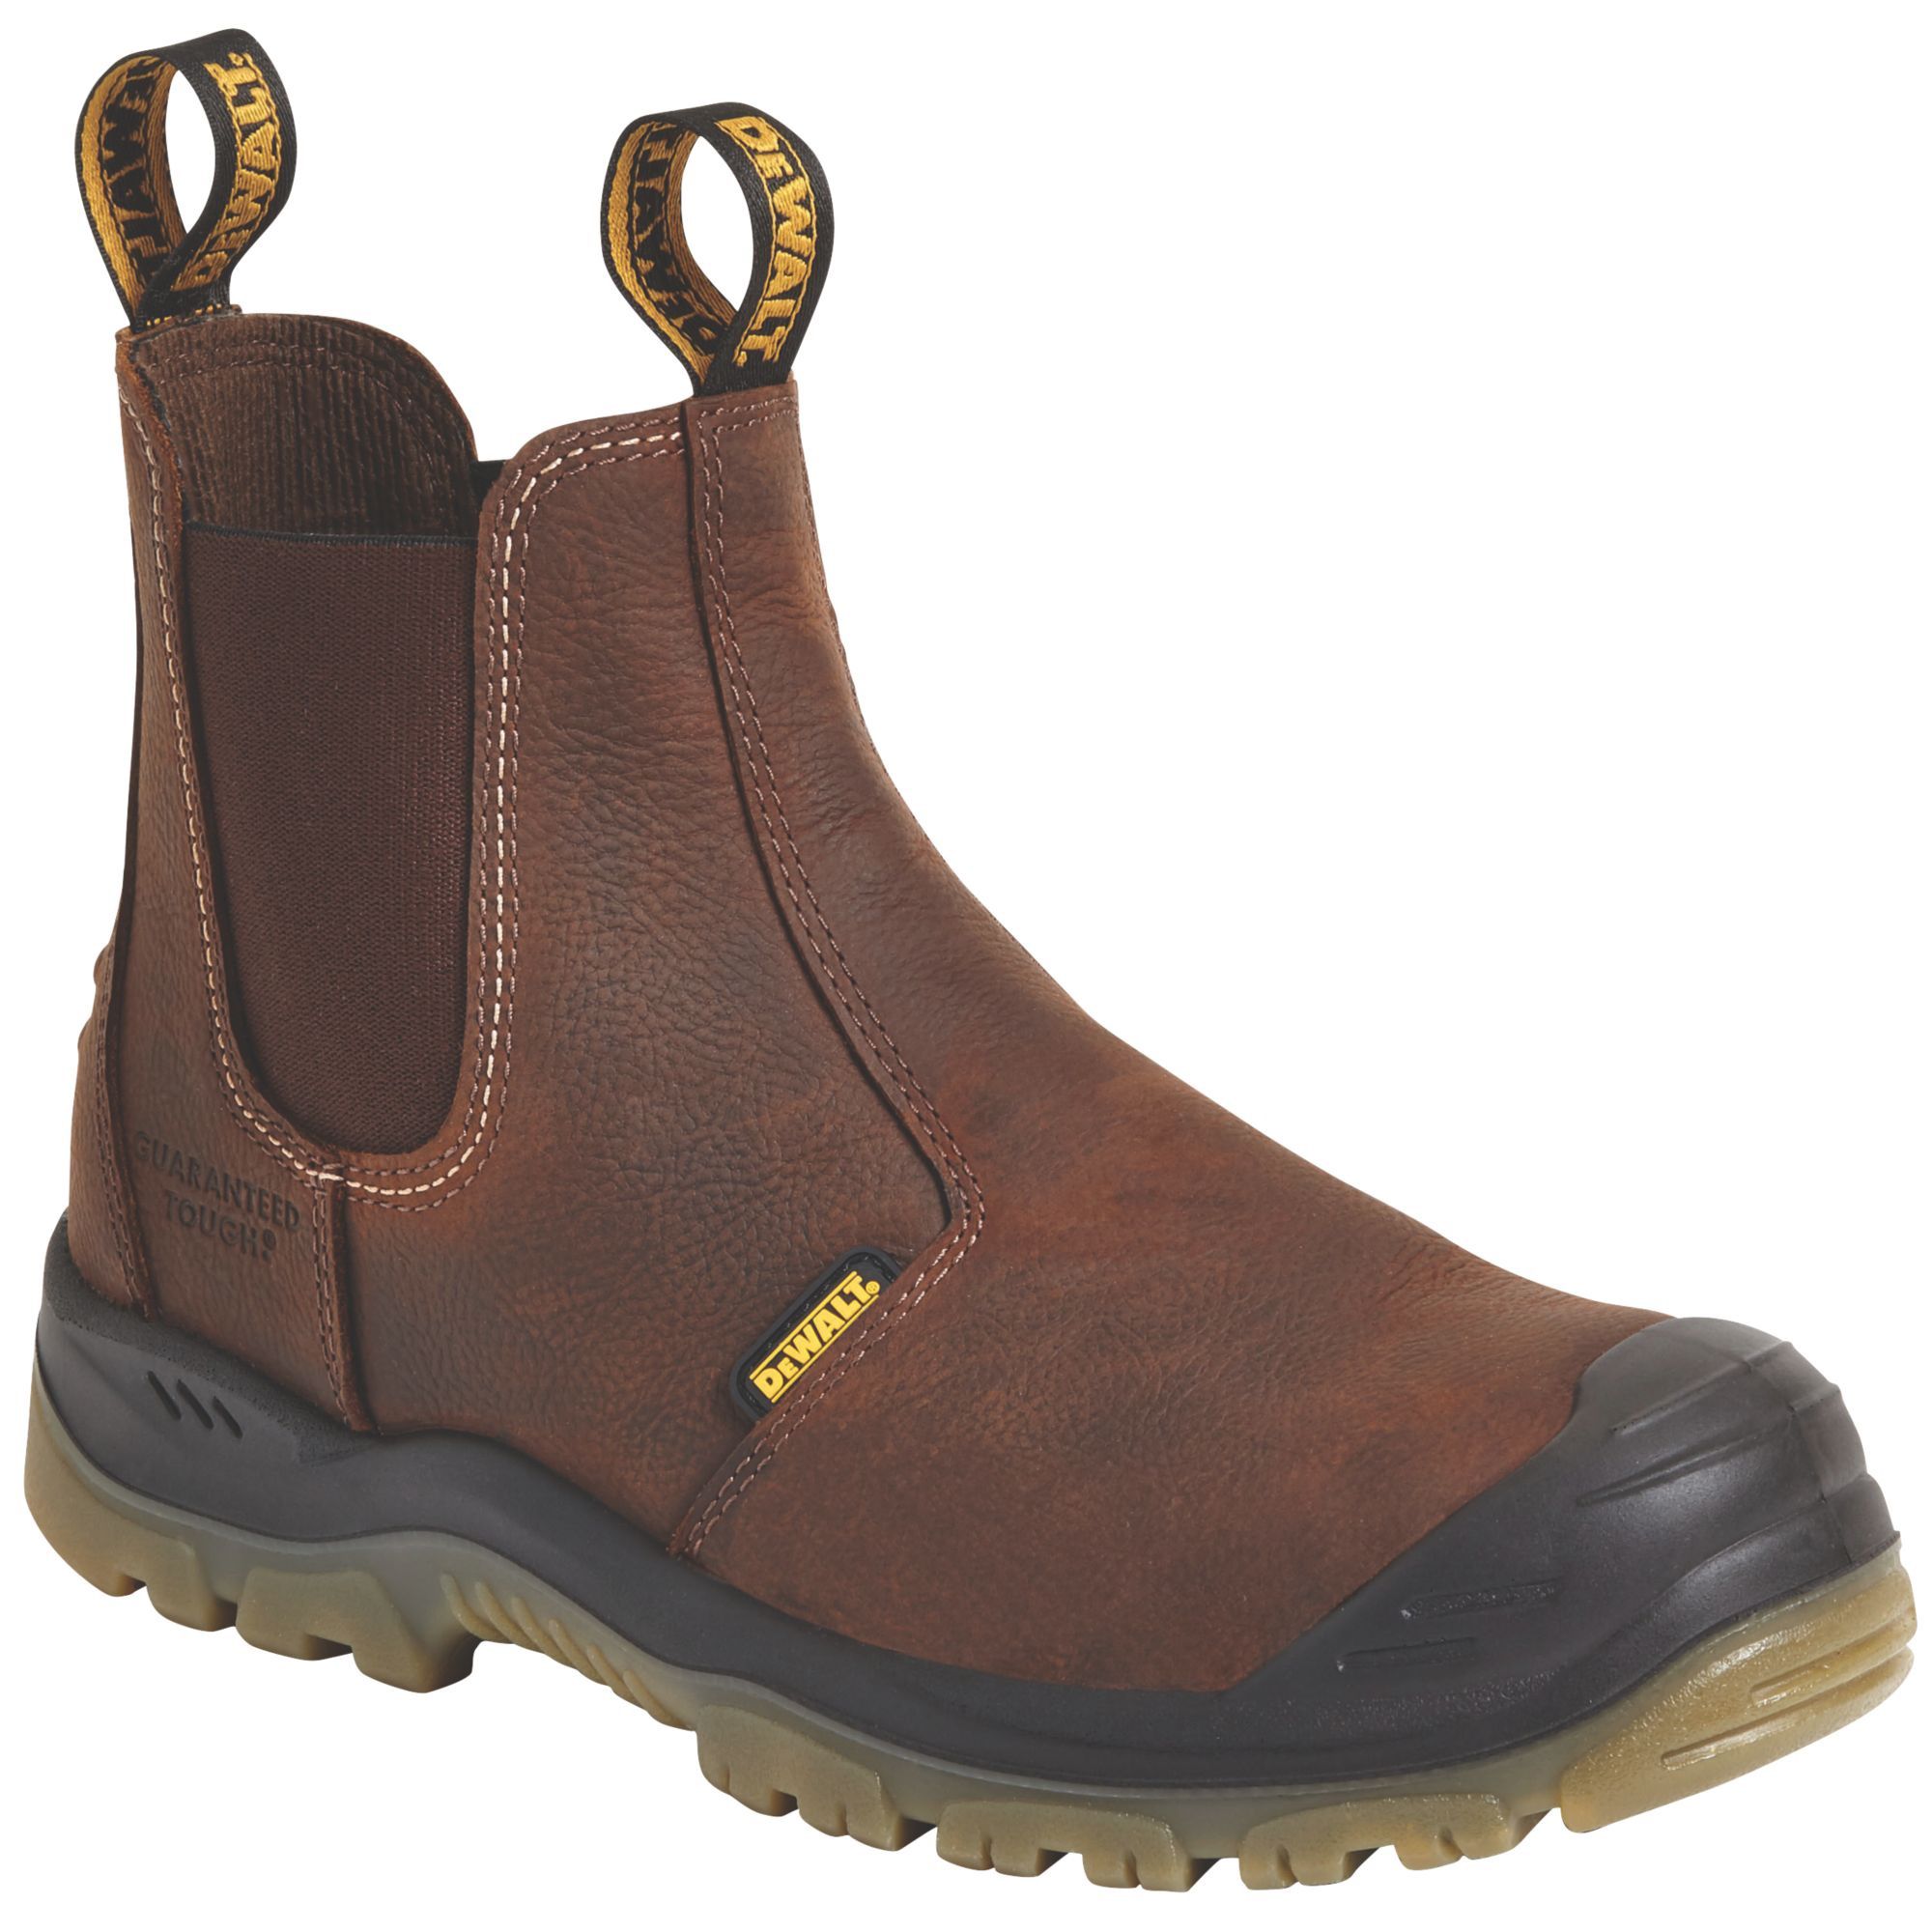 DeWalt Nitrogen Brown Dealer boots, Size 8